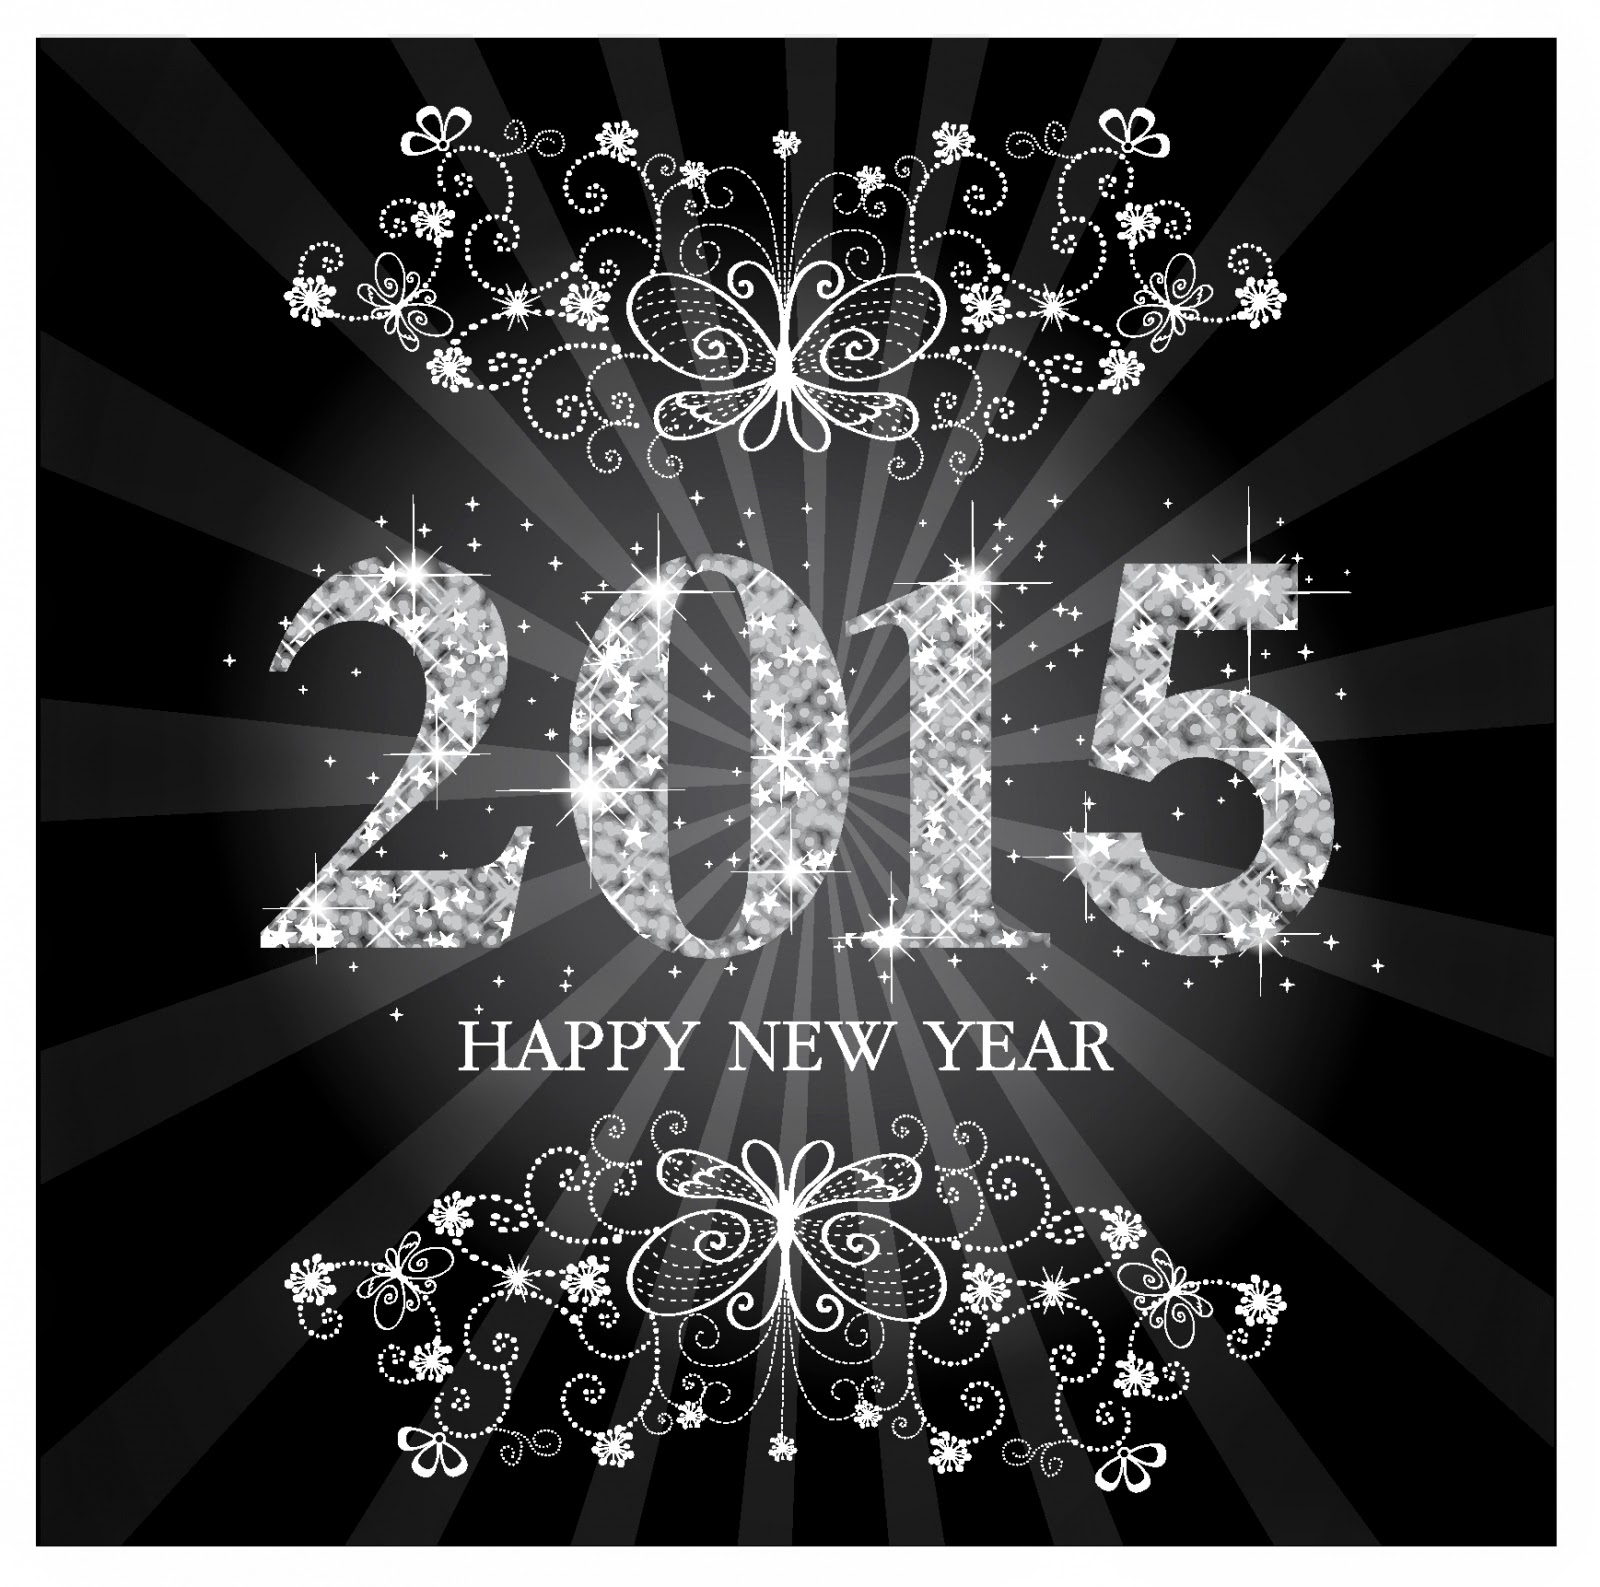 Happy New Year 2015 Cardblack And New Year 2015 Cardfree Greeting    